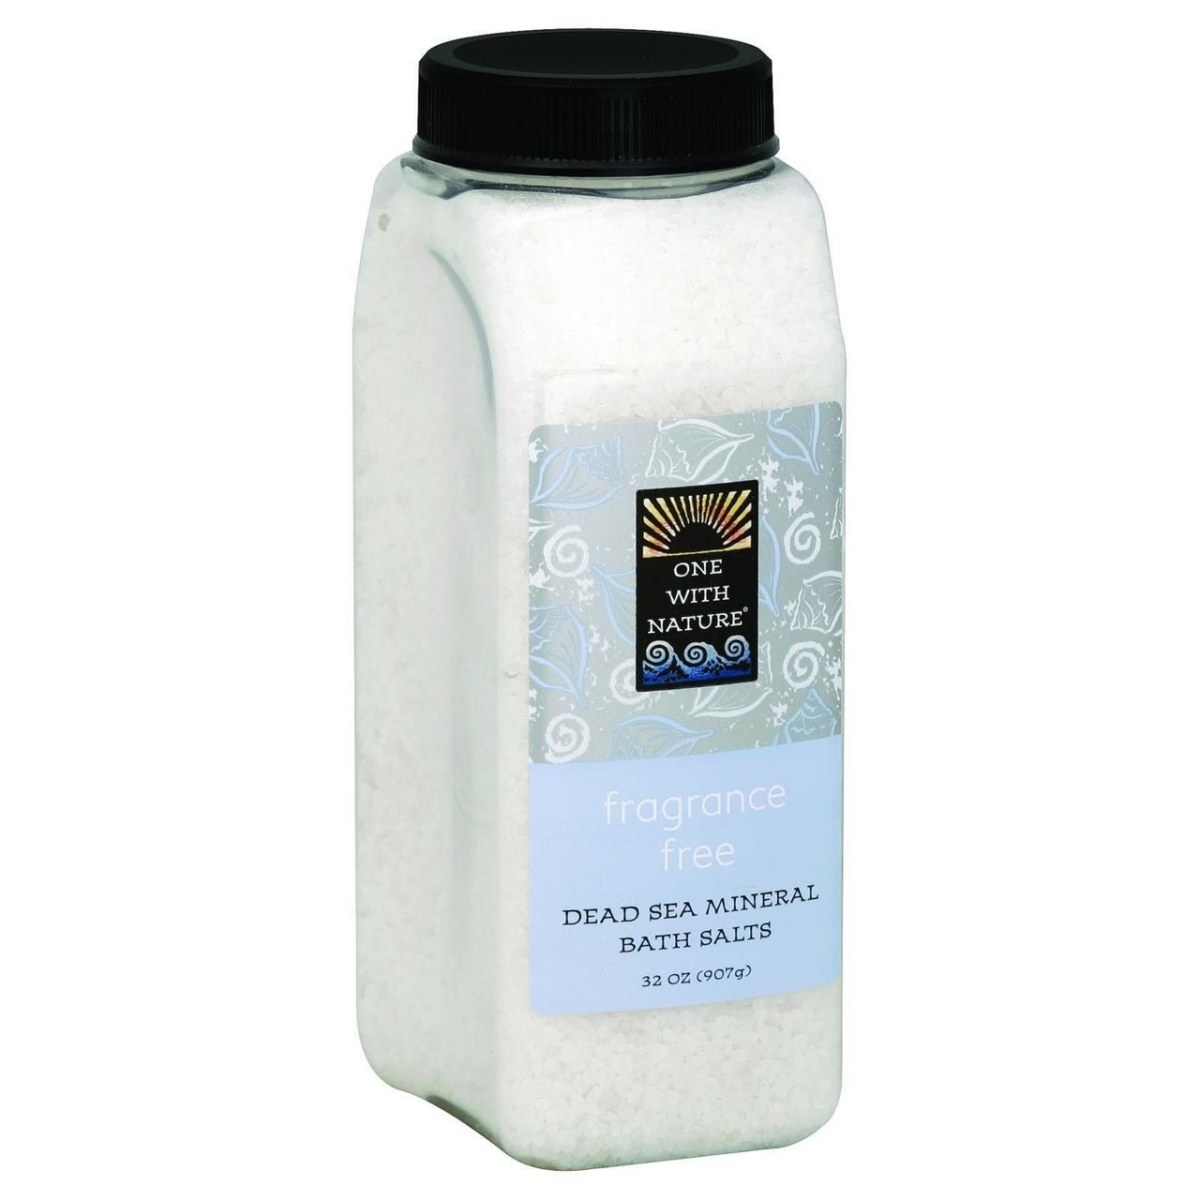 32 Oz Dead Sea Mineral Bath Salts - Fragrance Free